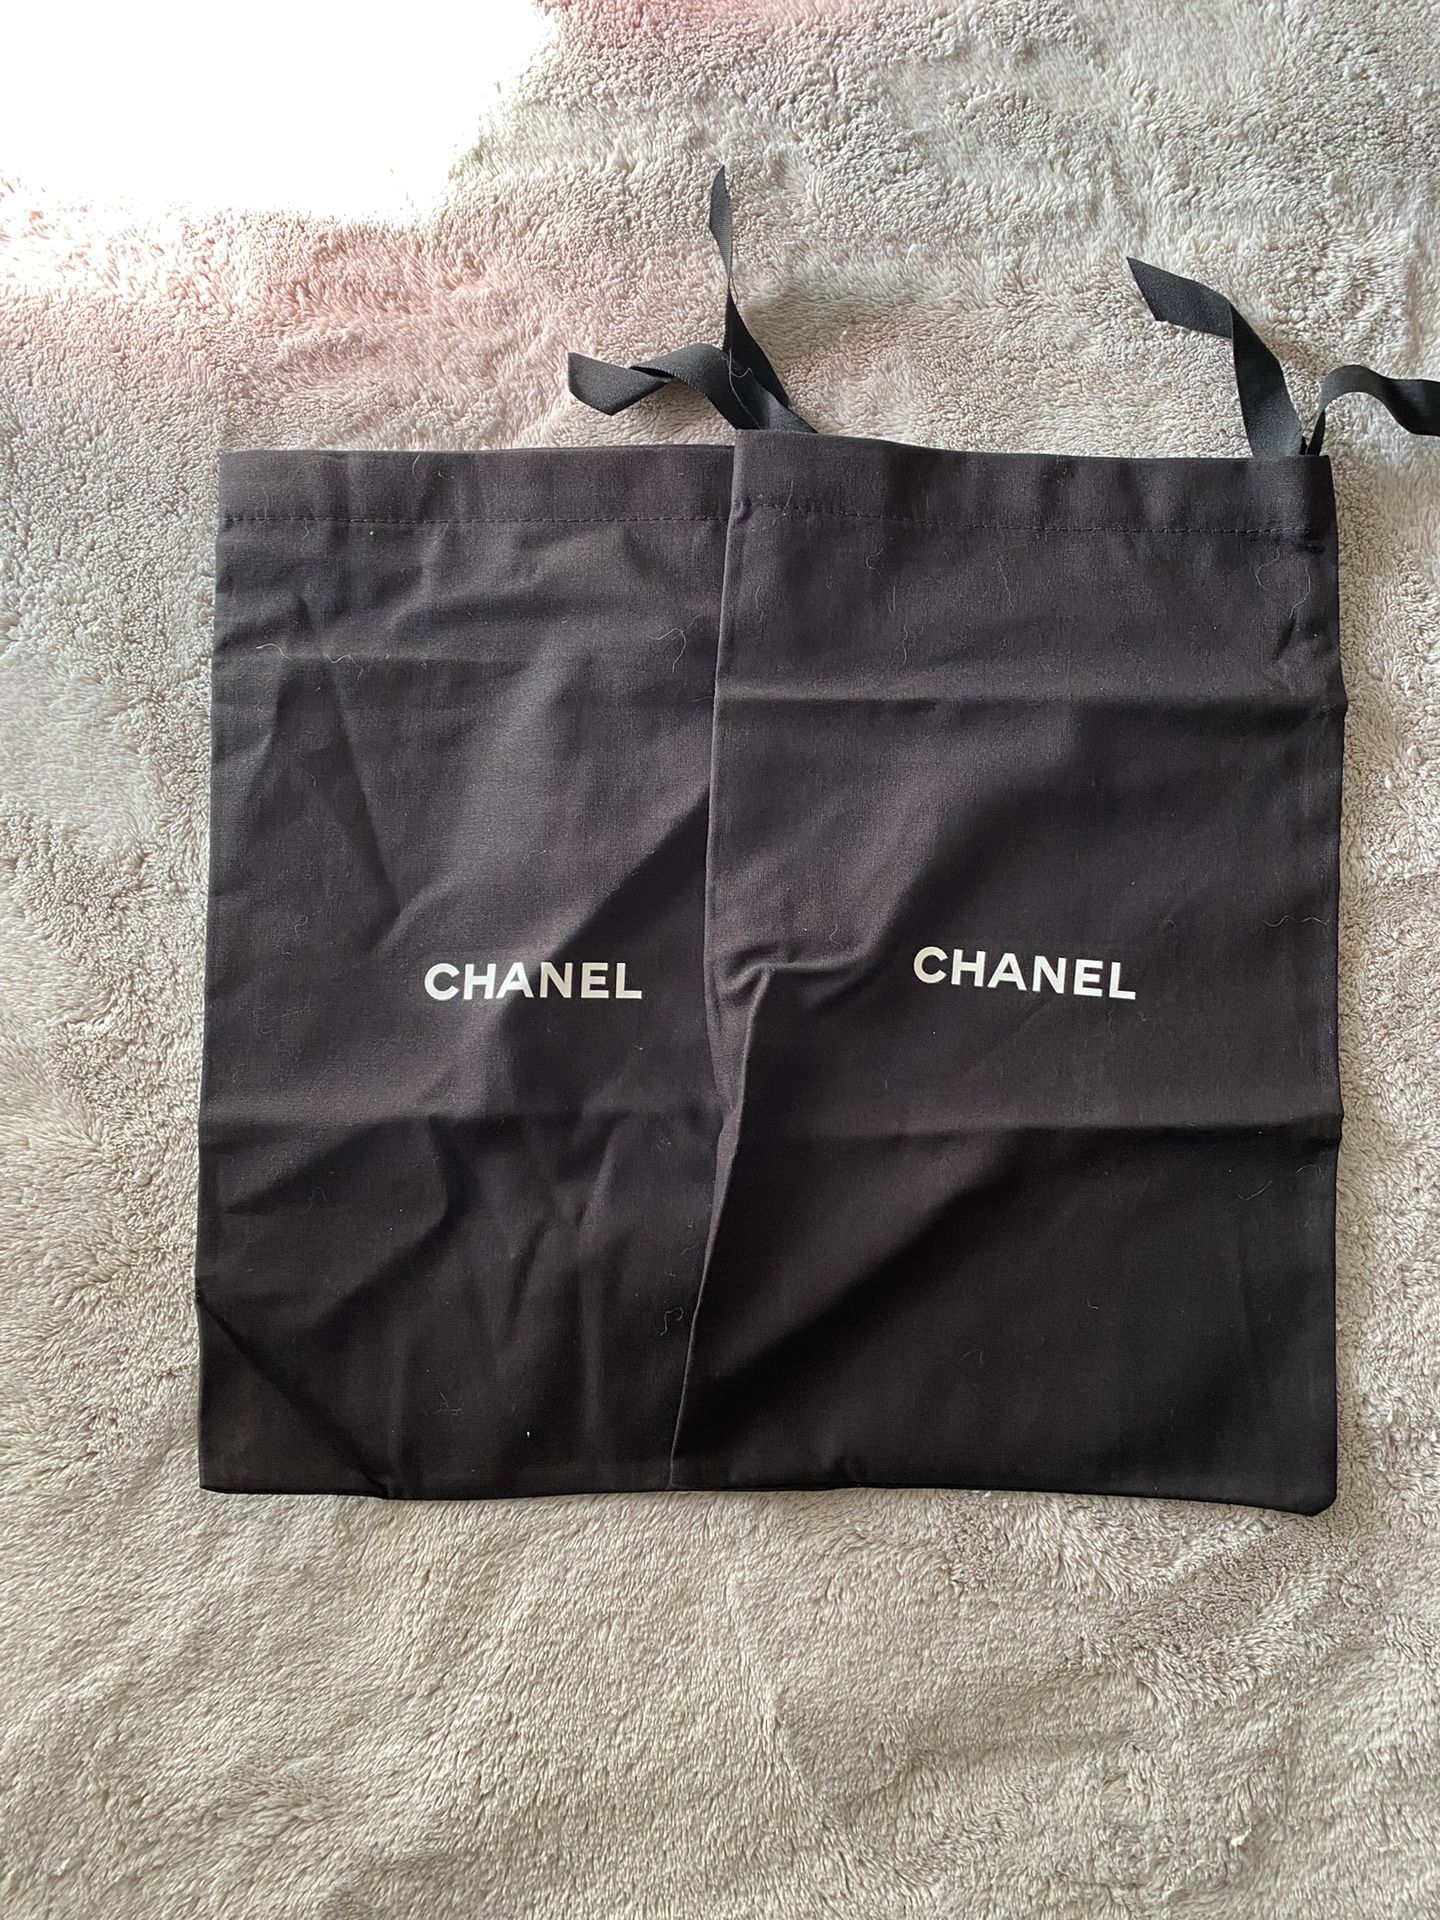 CHANEL, Bags, Chanel Storage Drawstring Dust Bag Cotton Black 25 X 7